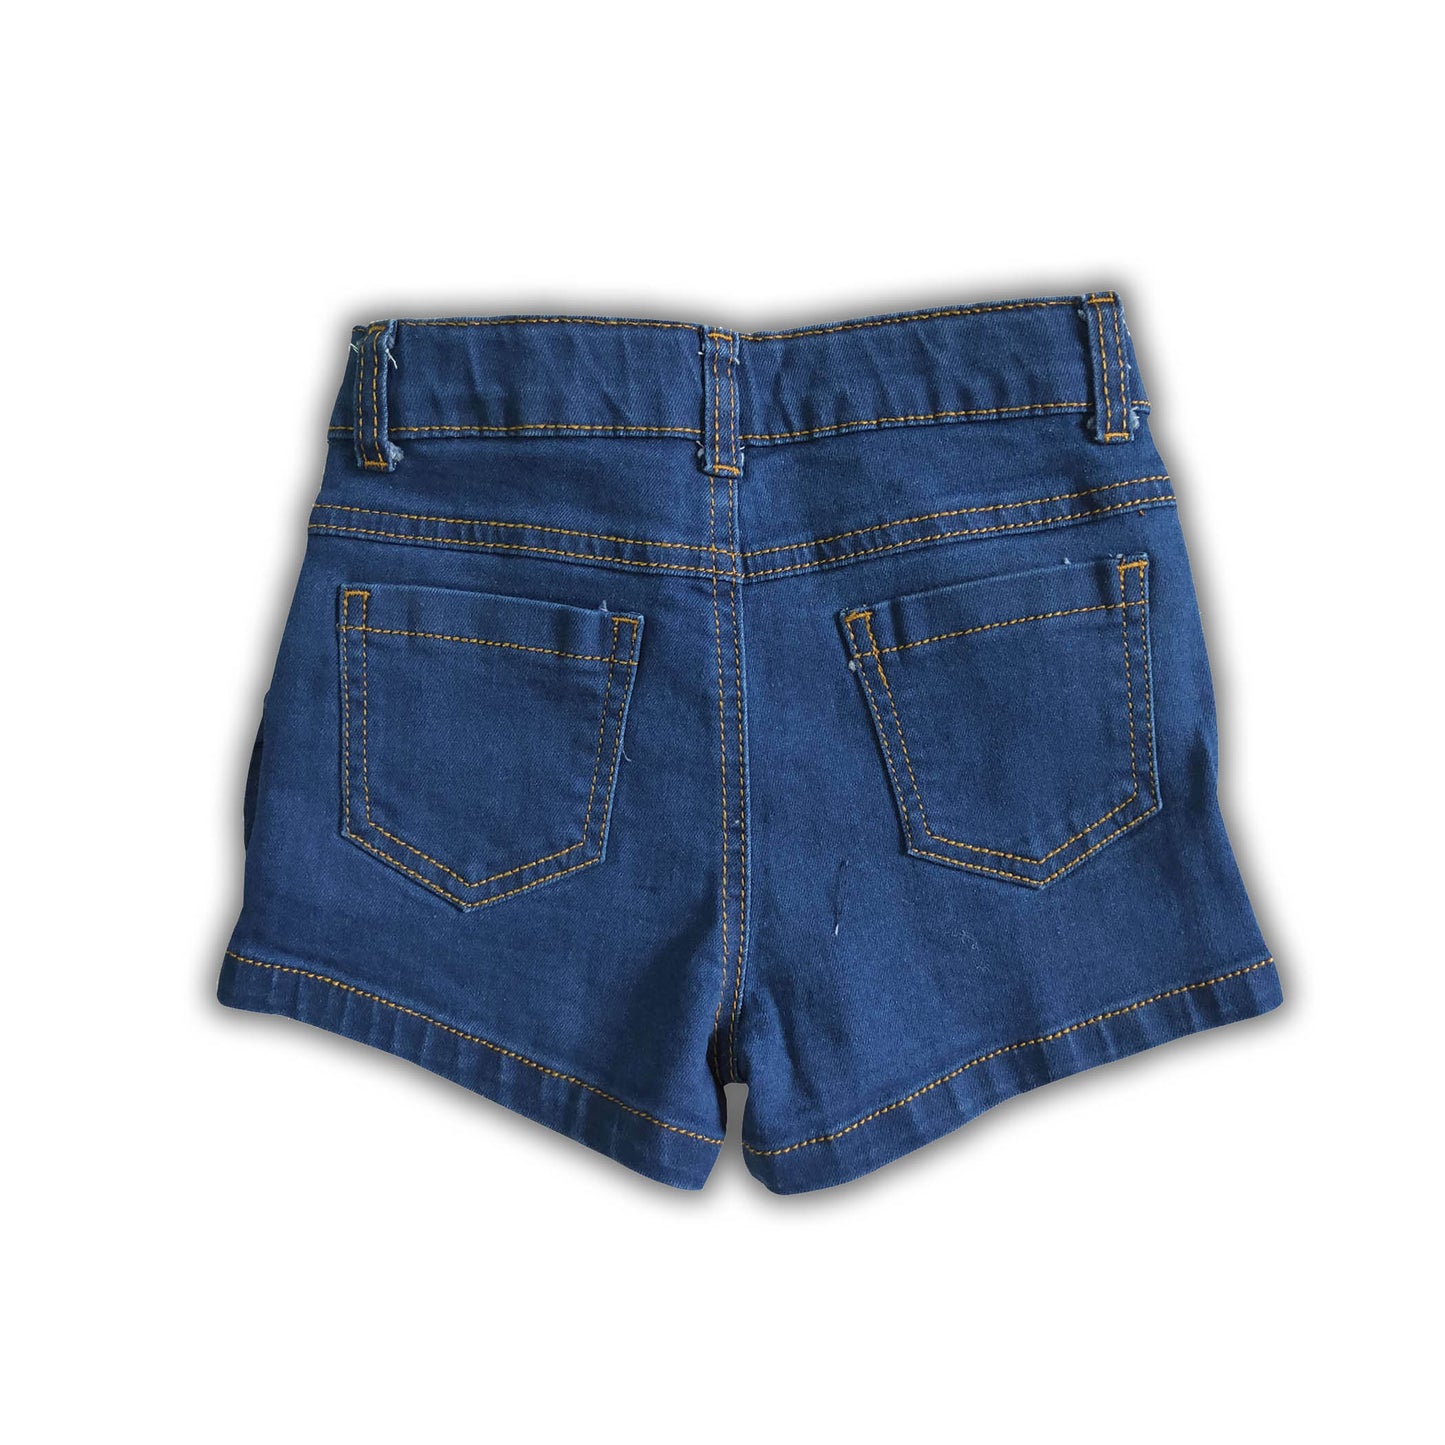 Blue elastic waistband jeans baby girls denim shorts